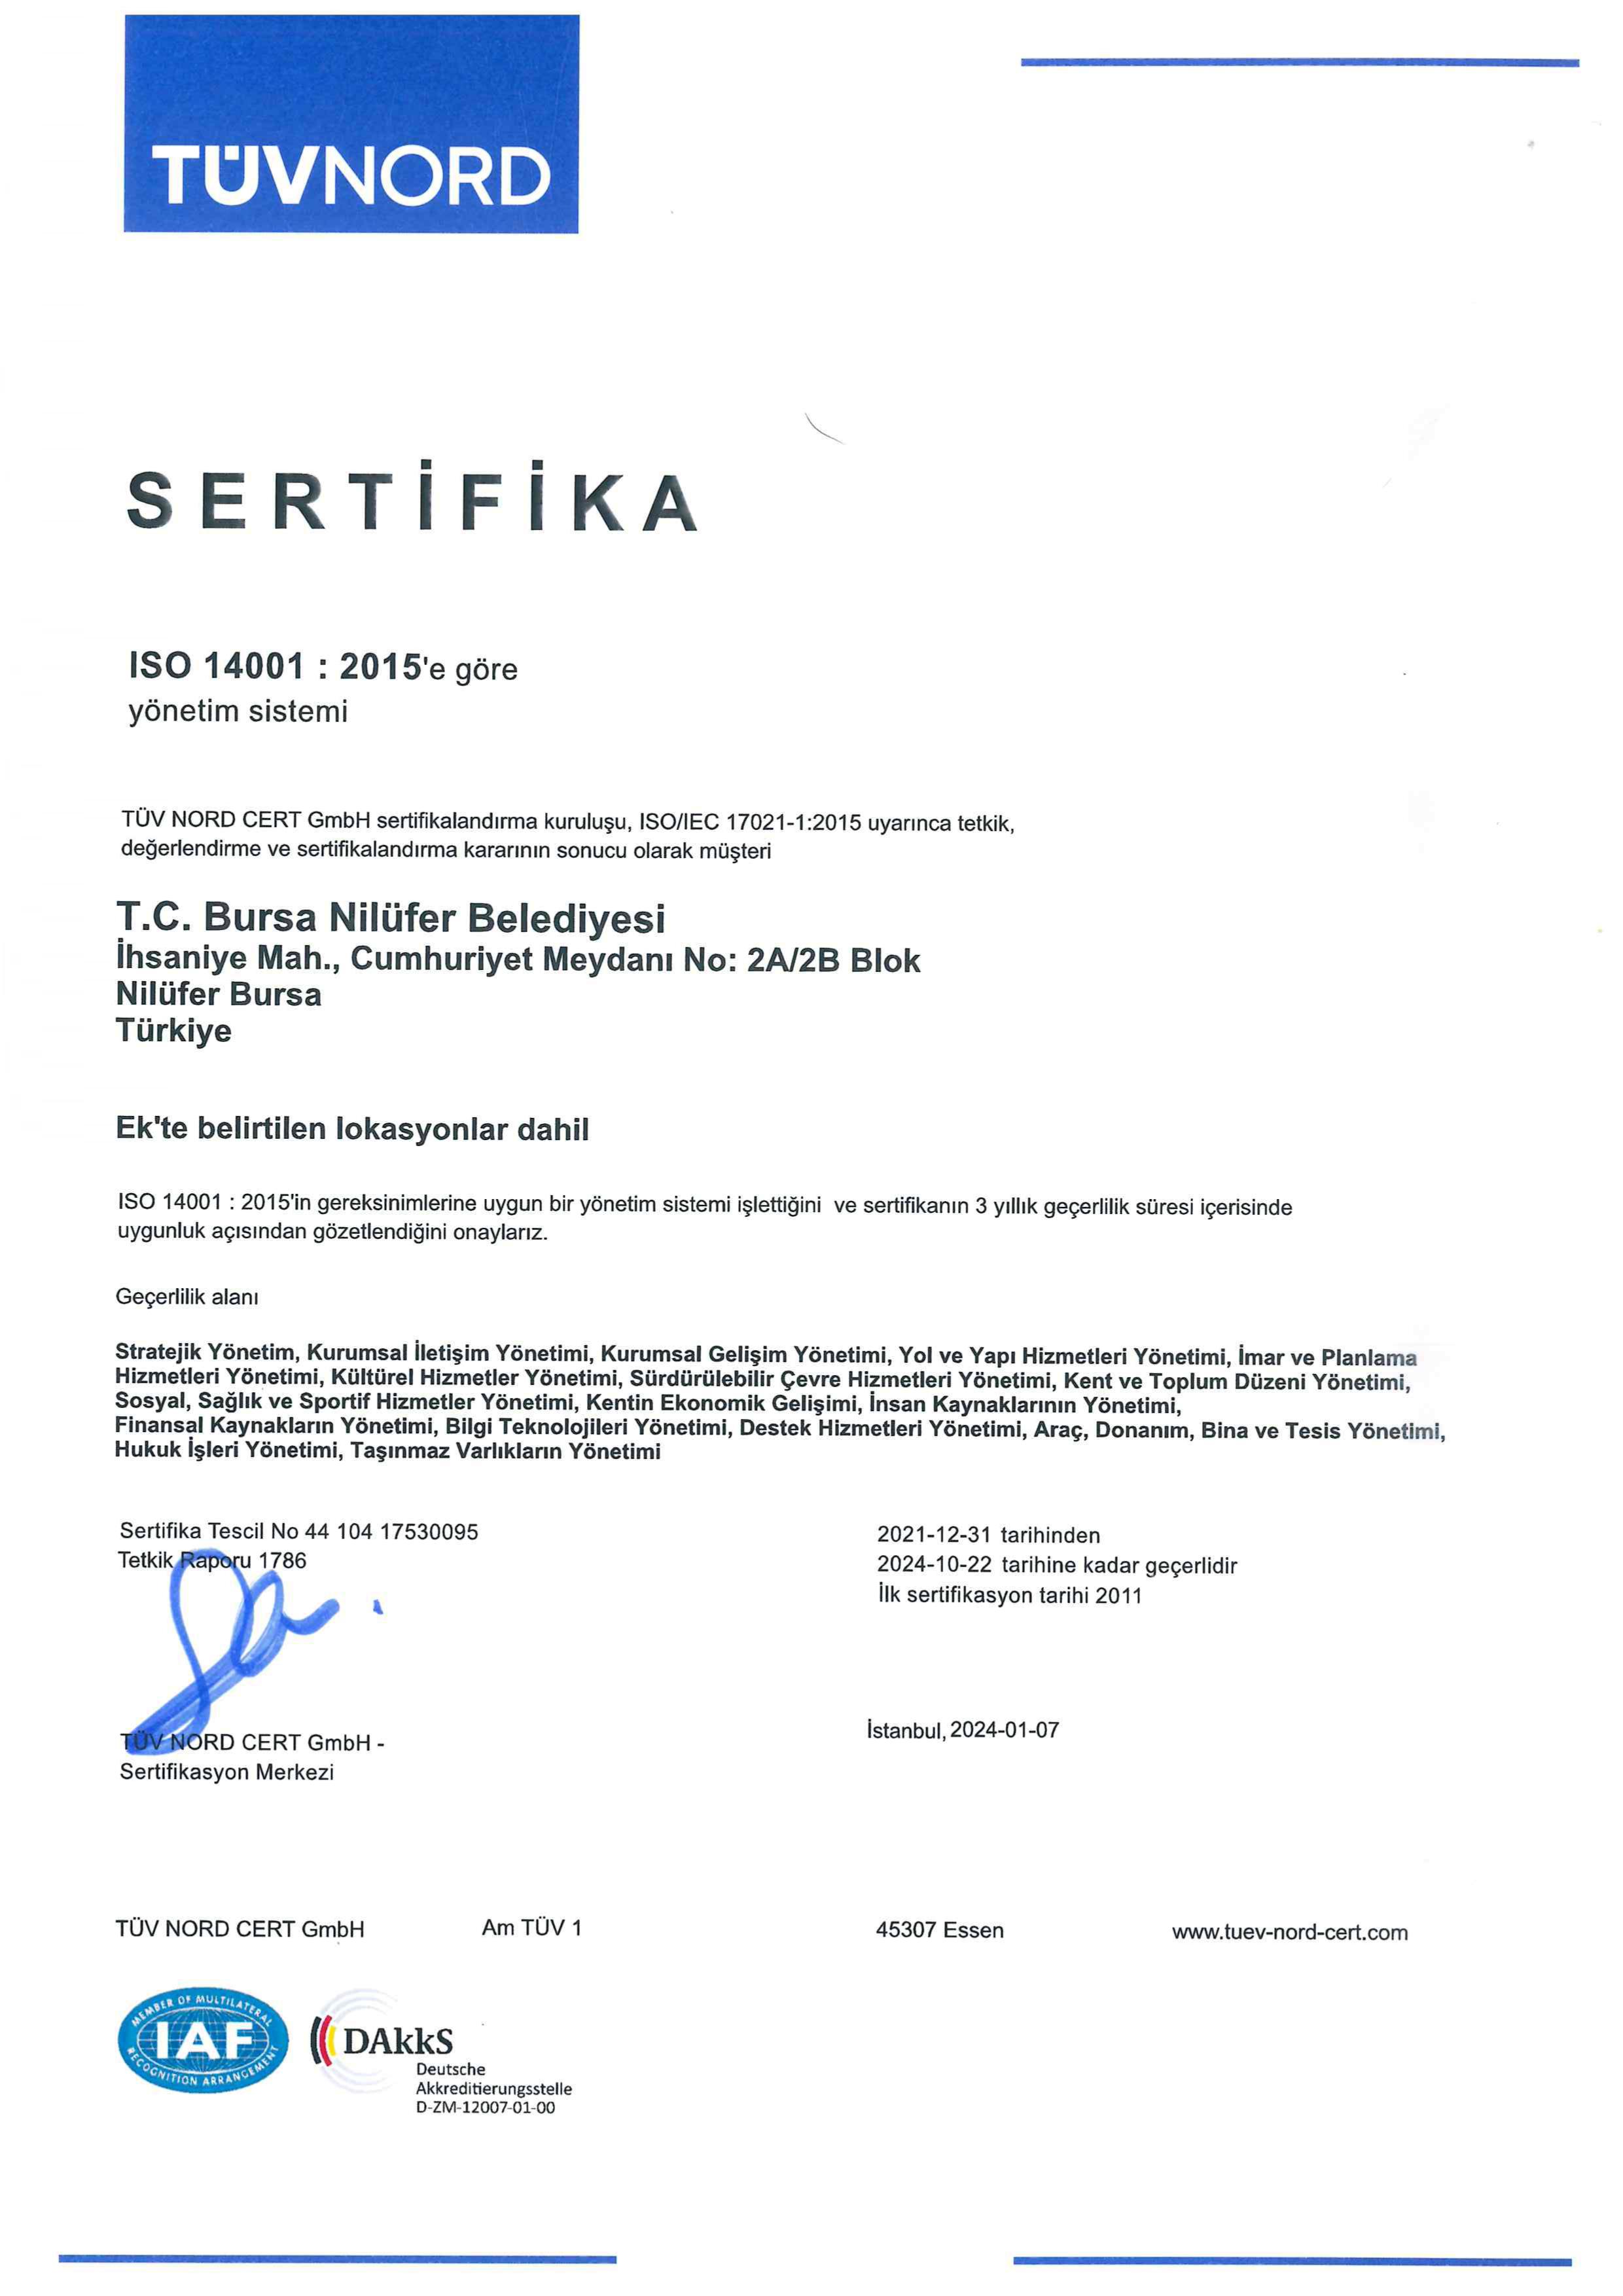 ISO 14001 2015.jpg (389 KB)